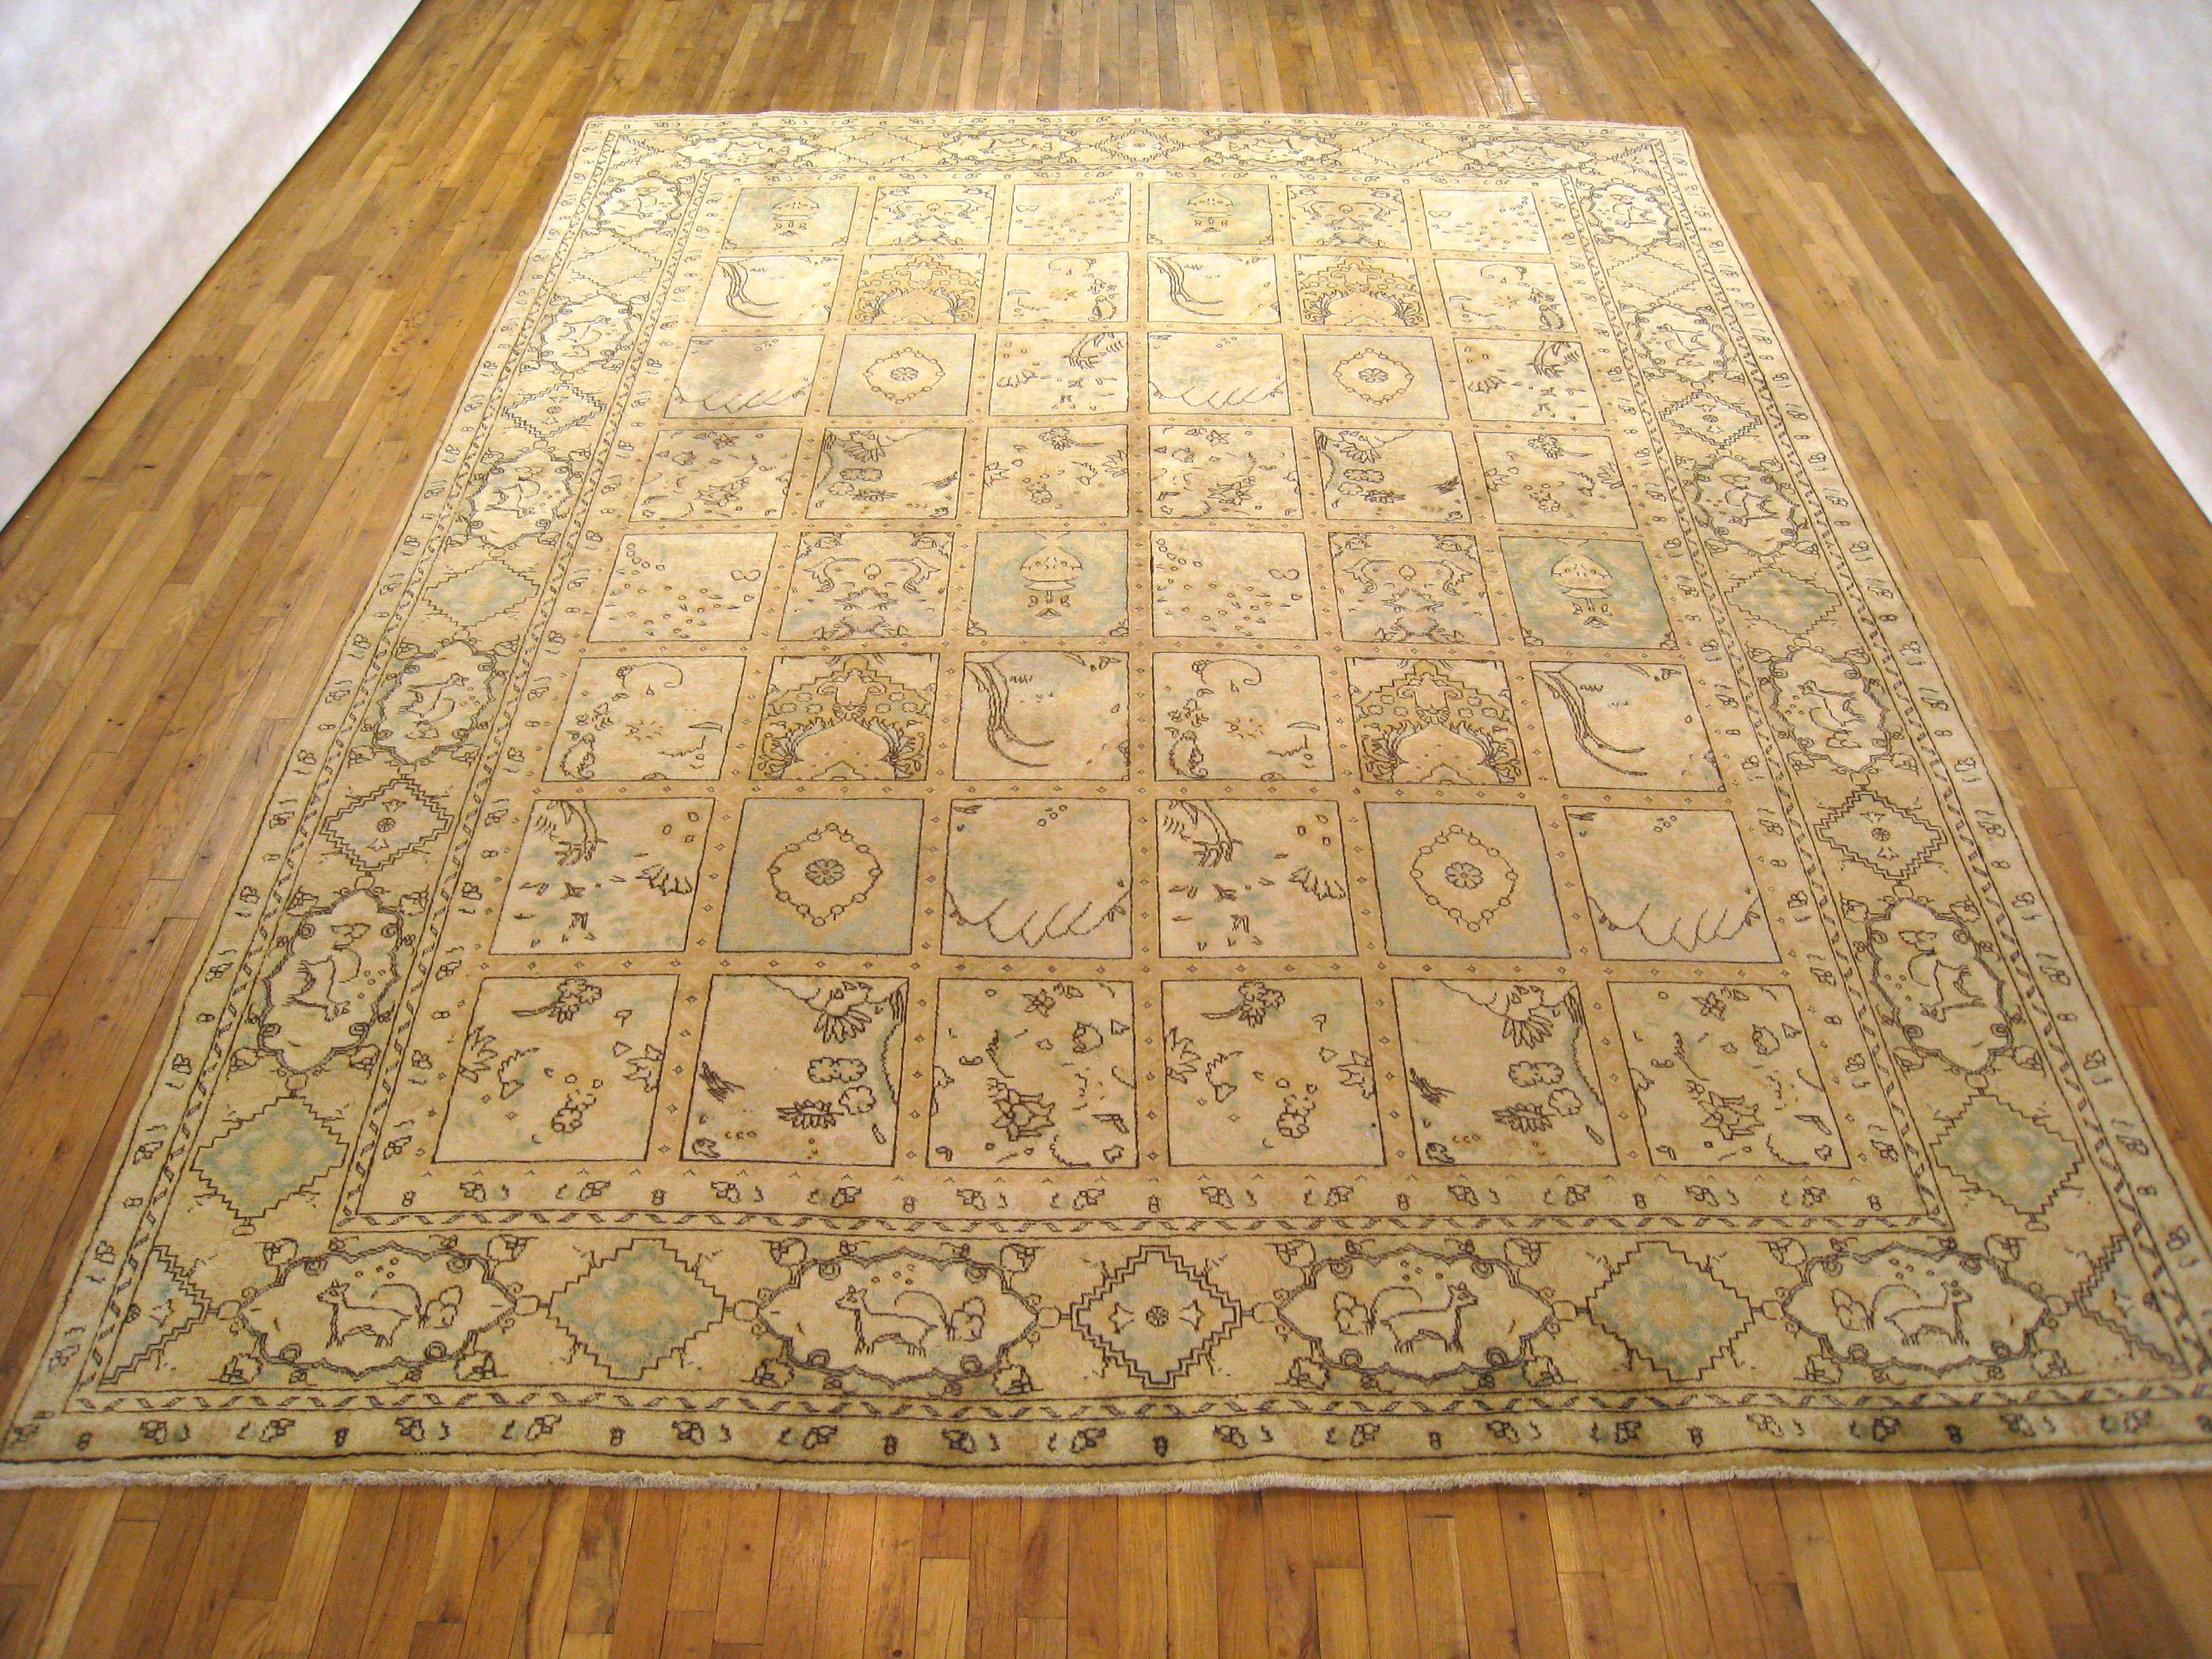 Vintage Persian Tabriz oriental carpet, circa 1940, room sized.

A Vintage Persian Tabriz oriental carpet, circa 1940. Size: 12'9